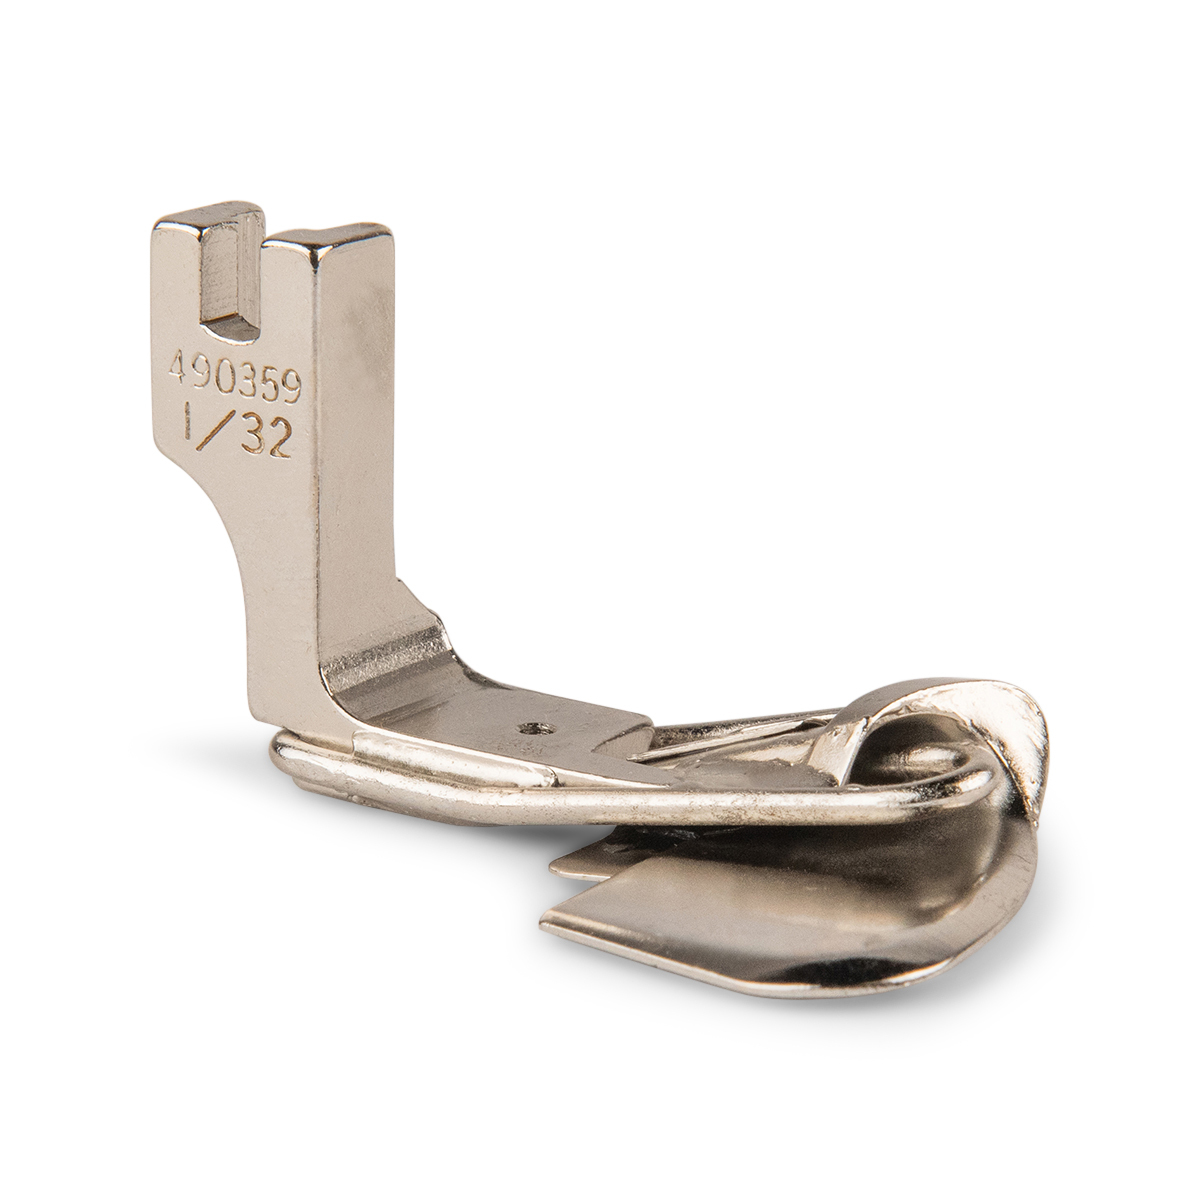 Invisible Zipper Foot  Generic Presser Feet & Accessories